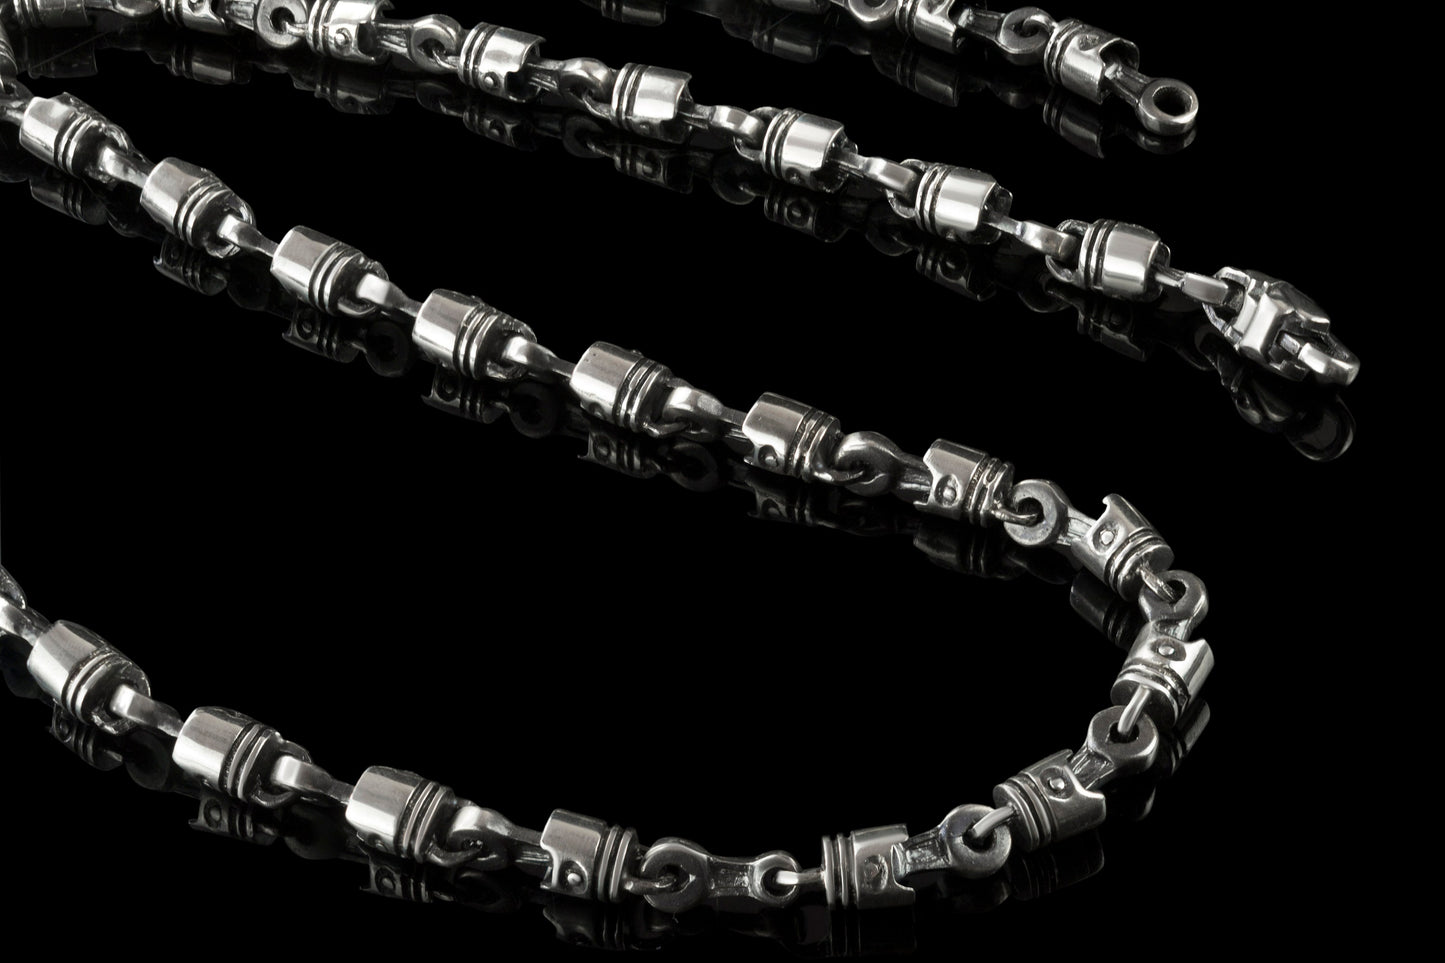 Bikers chain Biker jewelry Men's silver chain Piston Men silver necklace